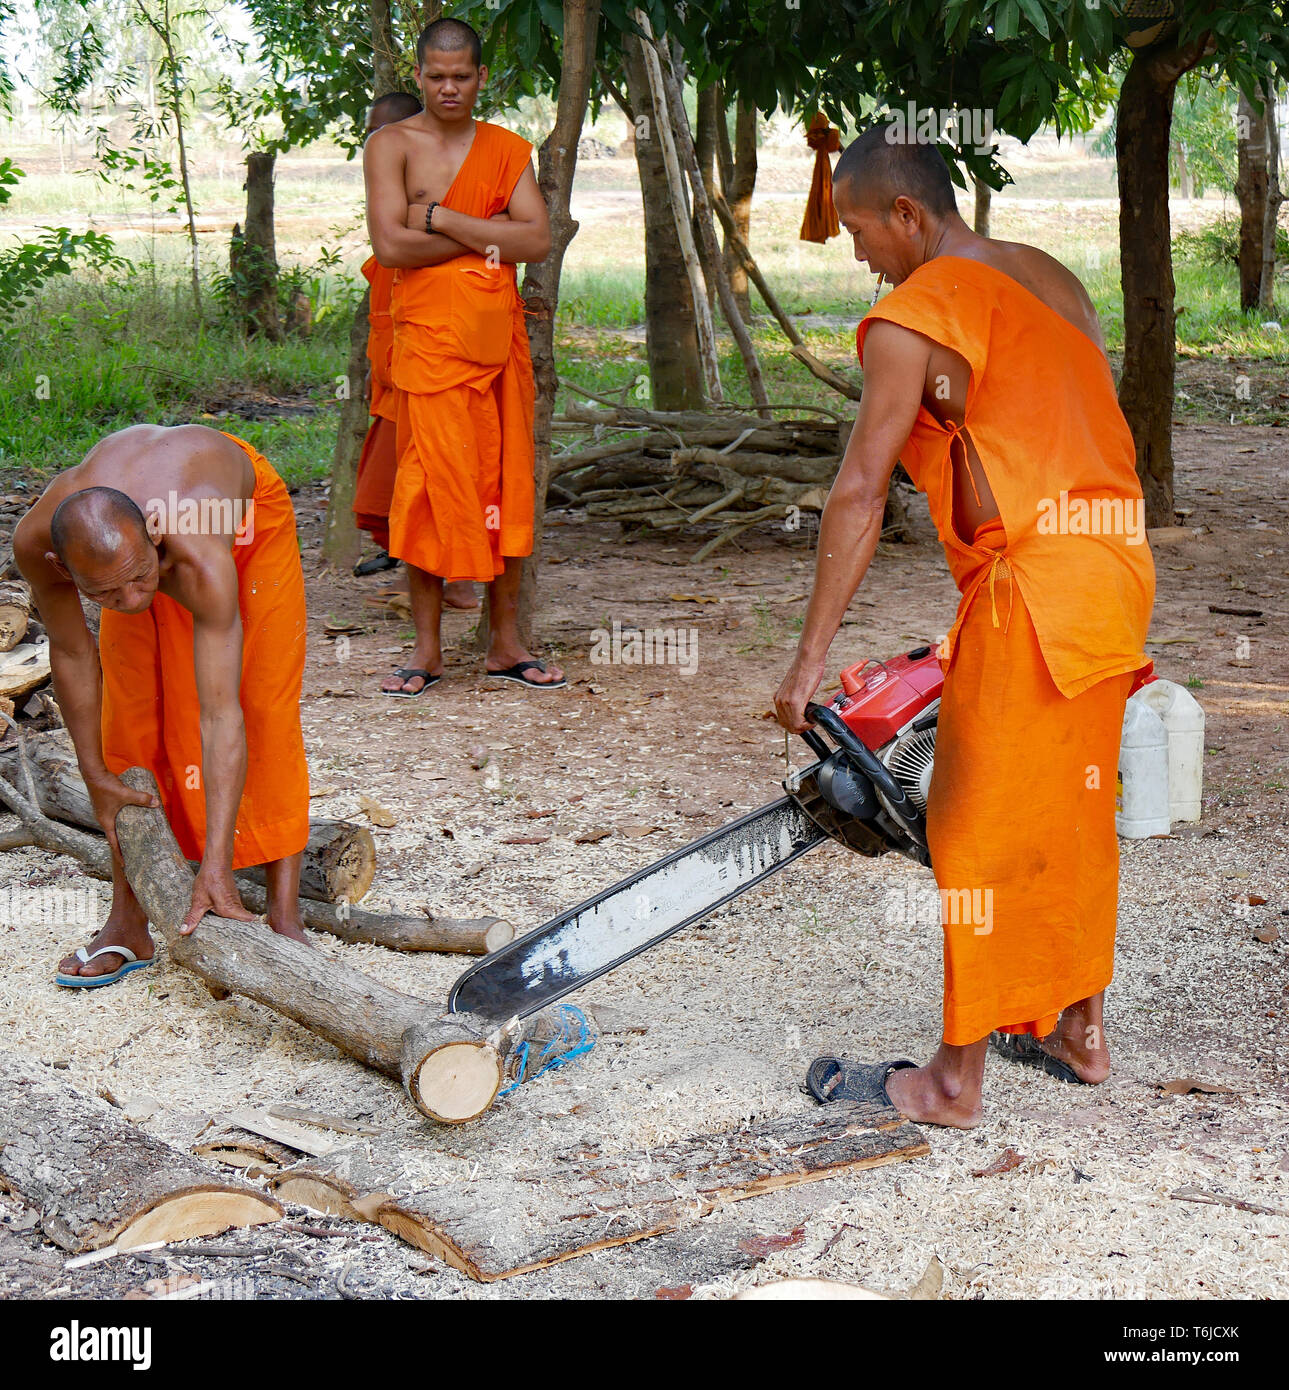 Mönche in Safranroben Schnittholz mit einer Kettensäge. Kampong Thom, Kambodscha, 20-12-2018 Stockfoto